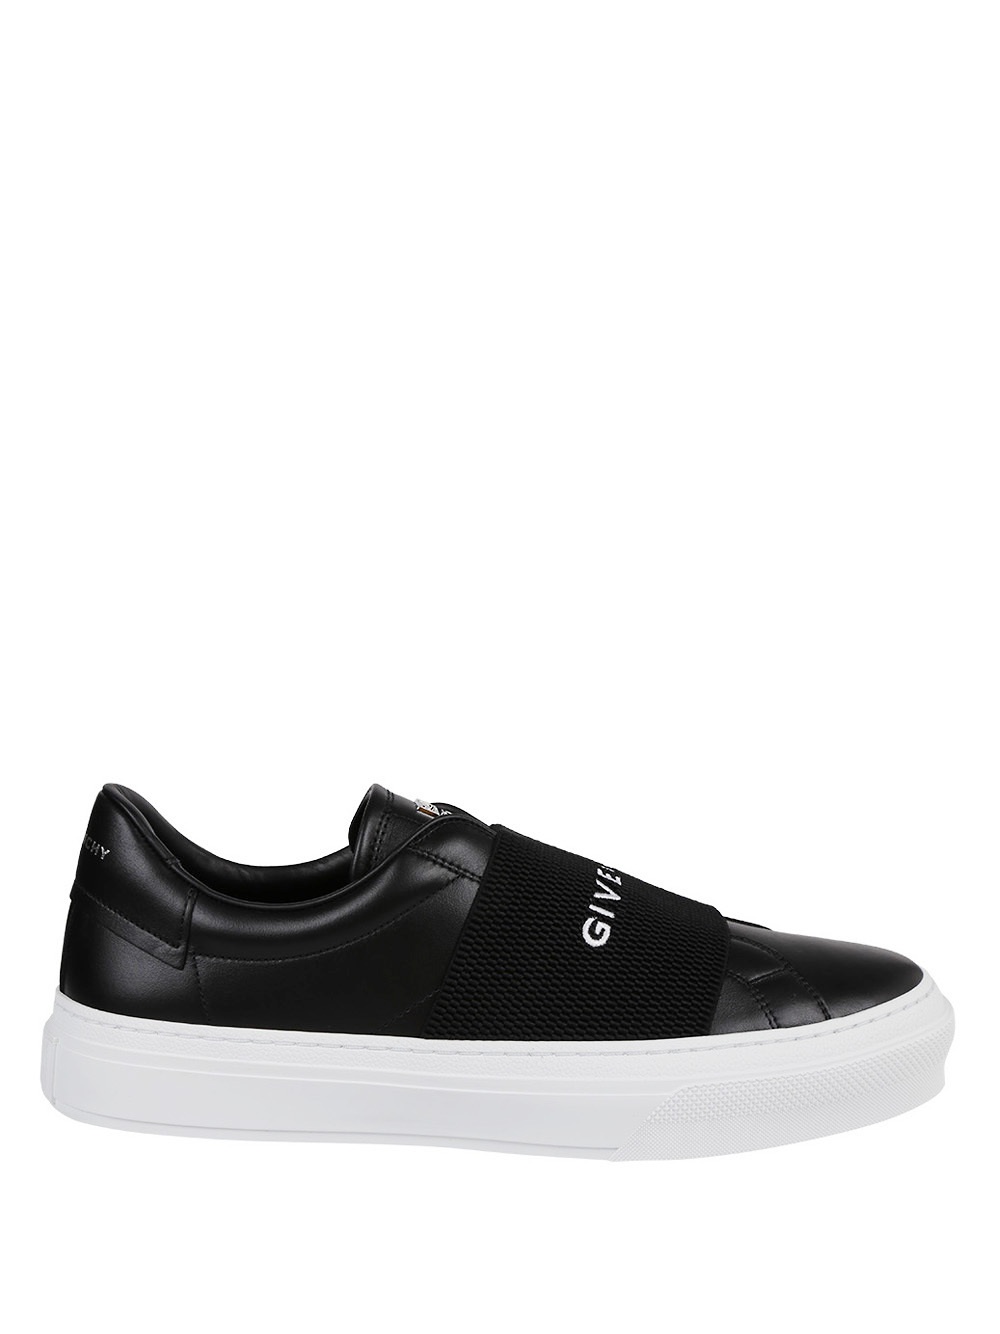 Givenchy Active Sneakers - Black - Size EU37 | Sneakers, Black leather  sneakers, Givenchy shoes